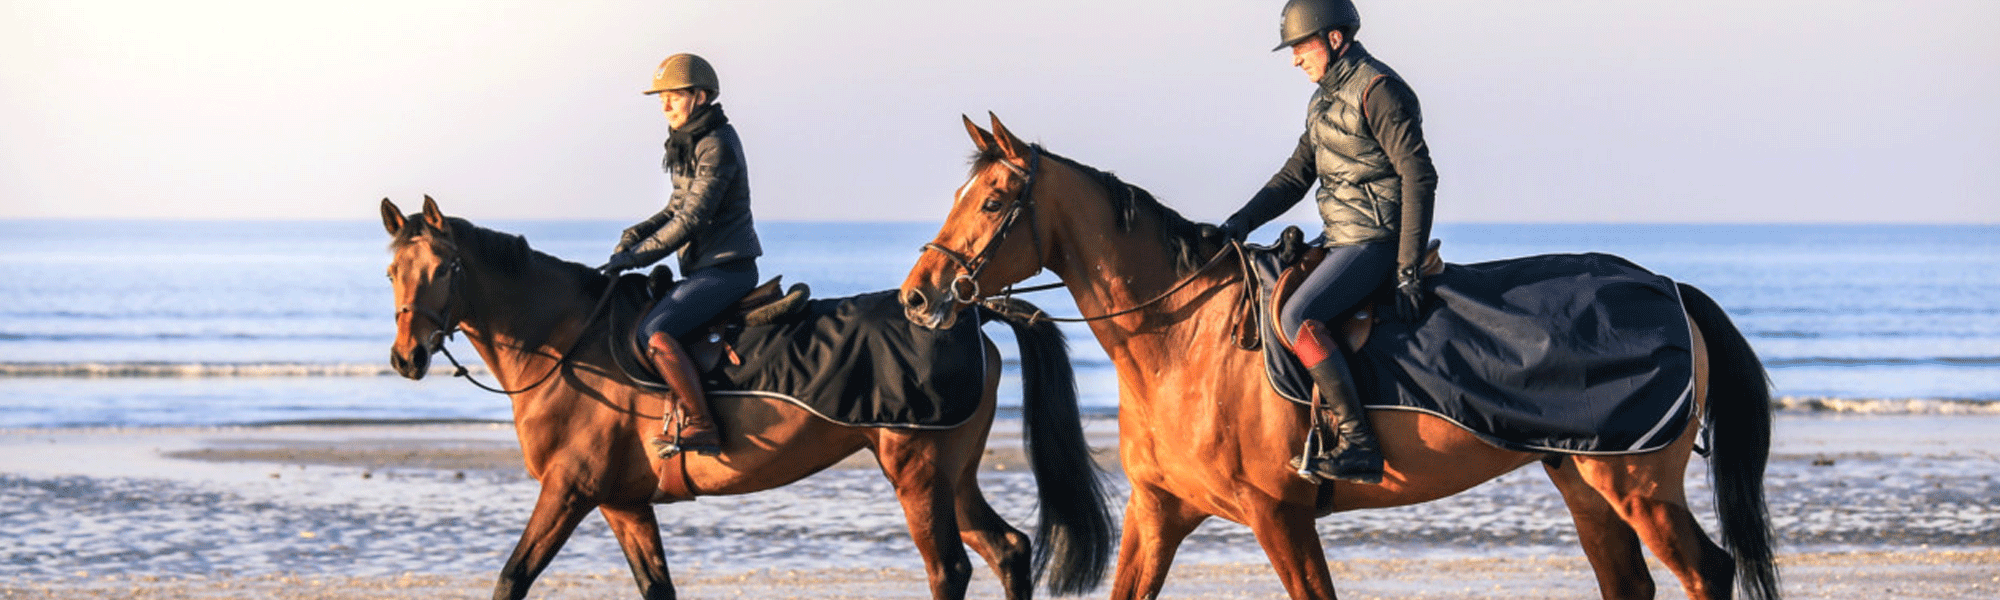 balade à cheval plage Deauville